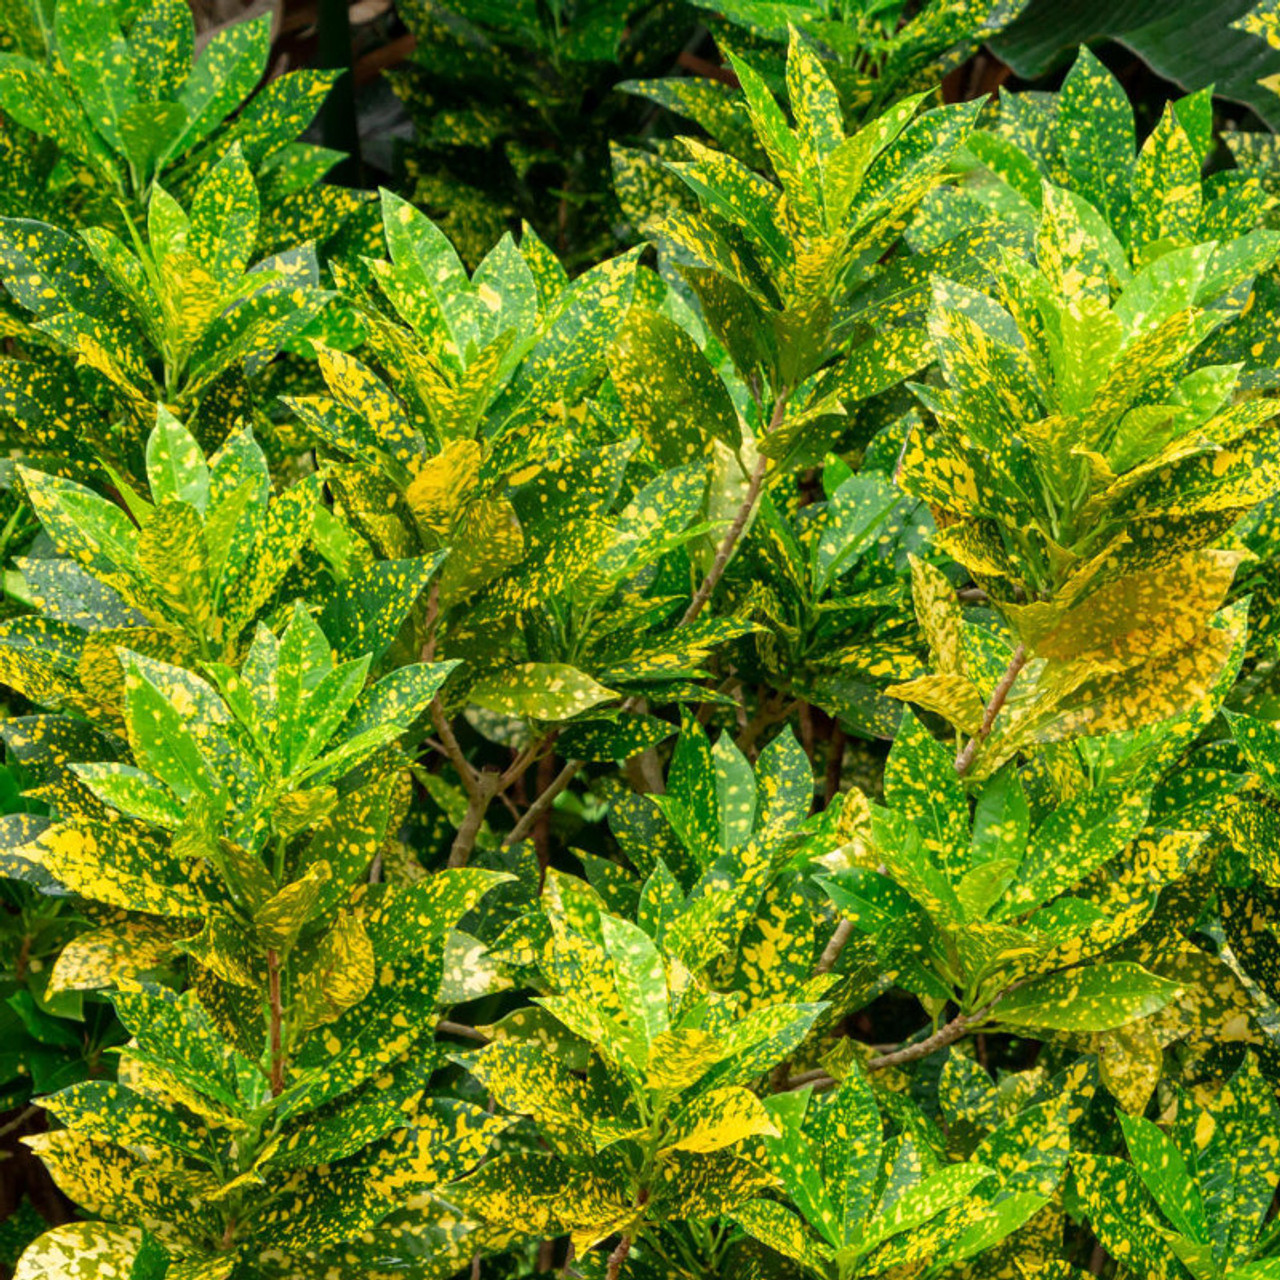 Liquid Gold Leaf - Indoor Plant Feed